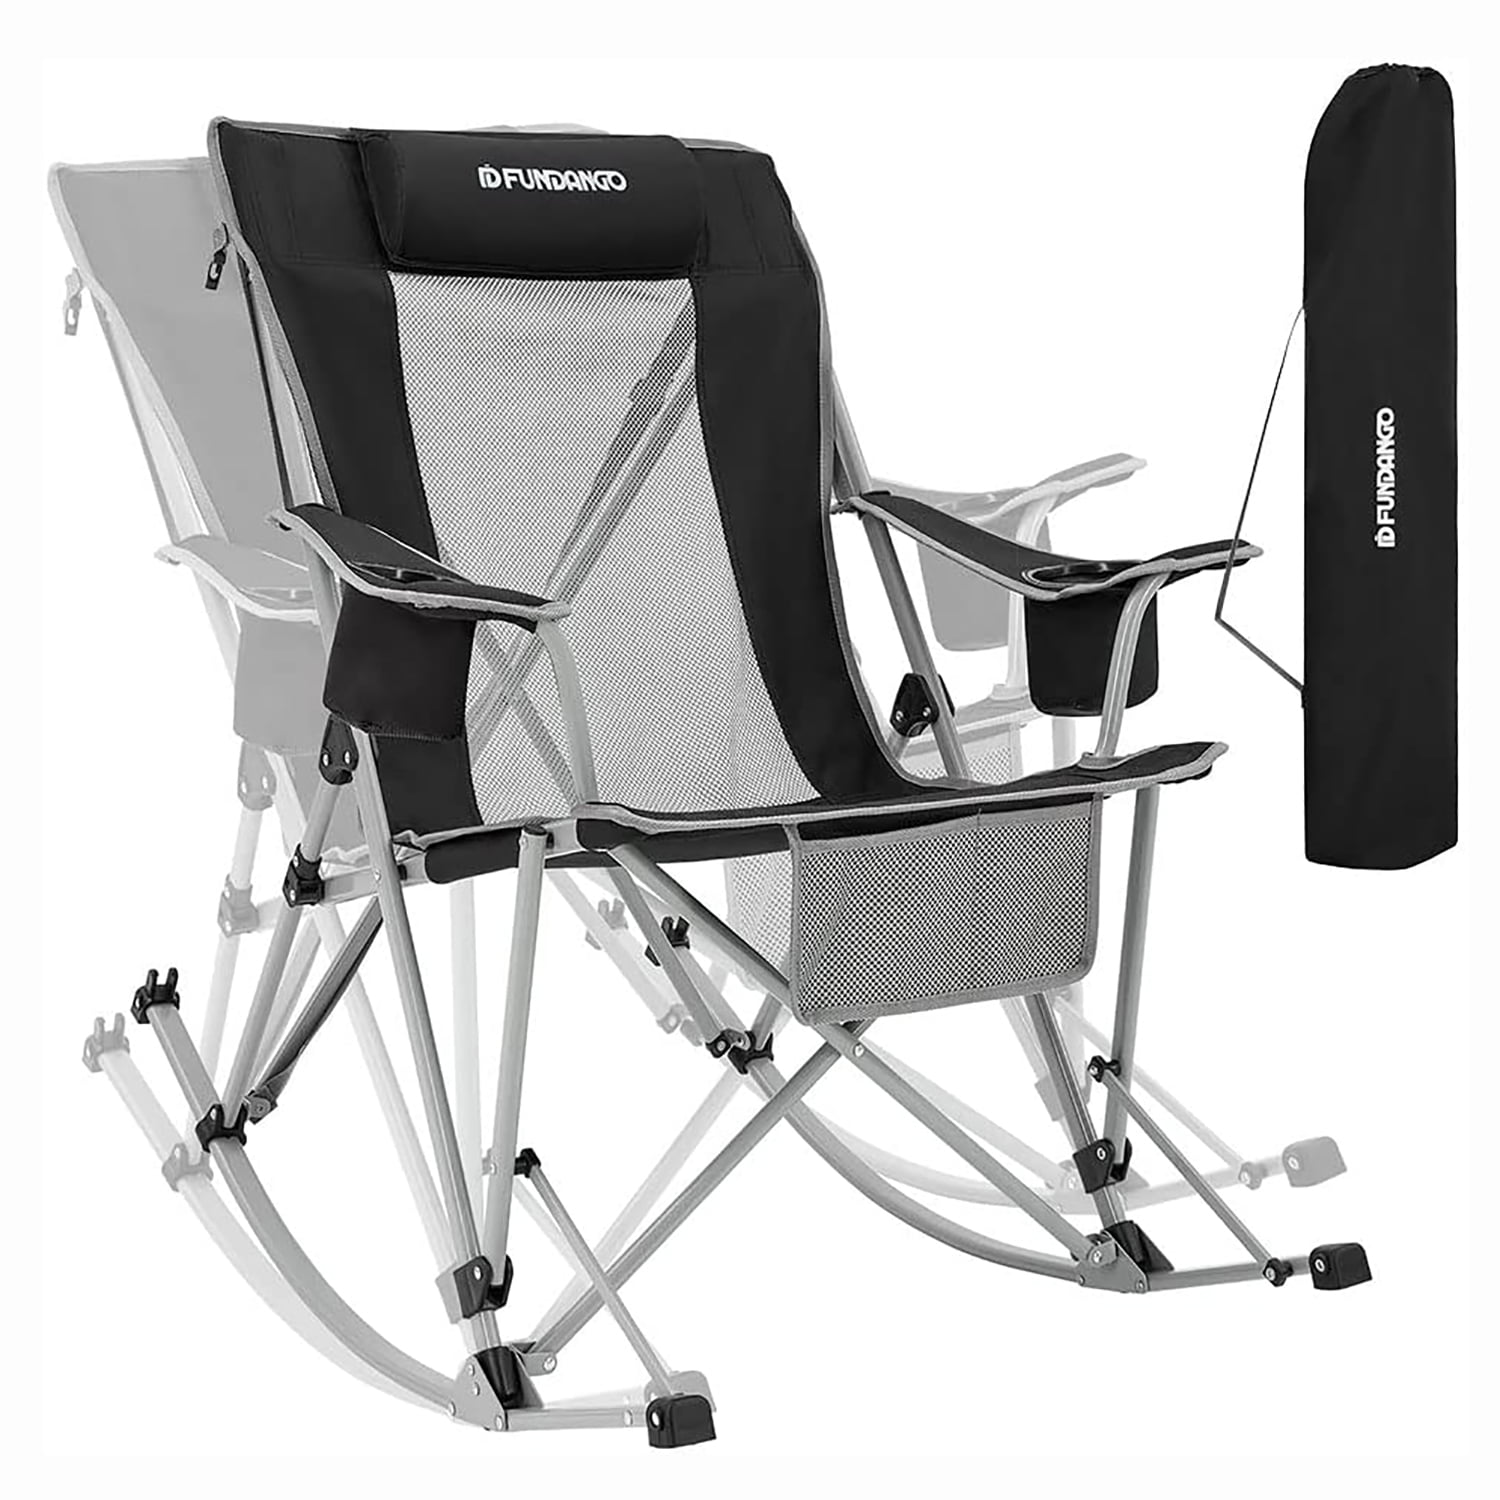 FUNDANGO Oversized Rocking Camping Chair For Adults Outdoor Rocking Folding Chairs Black 3b038188 4e3b 448e 9a72 1562d2cd7d4b.6deeb5243eb9f0ae9a80bc26d68f2fbc 